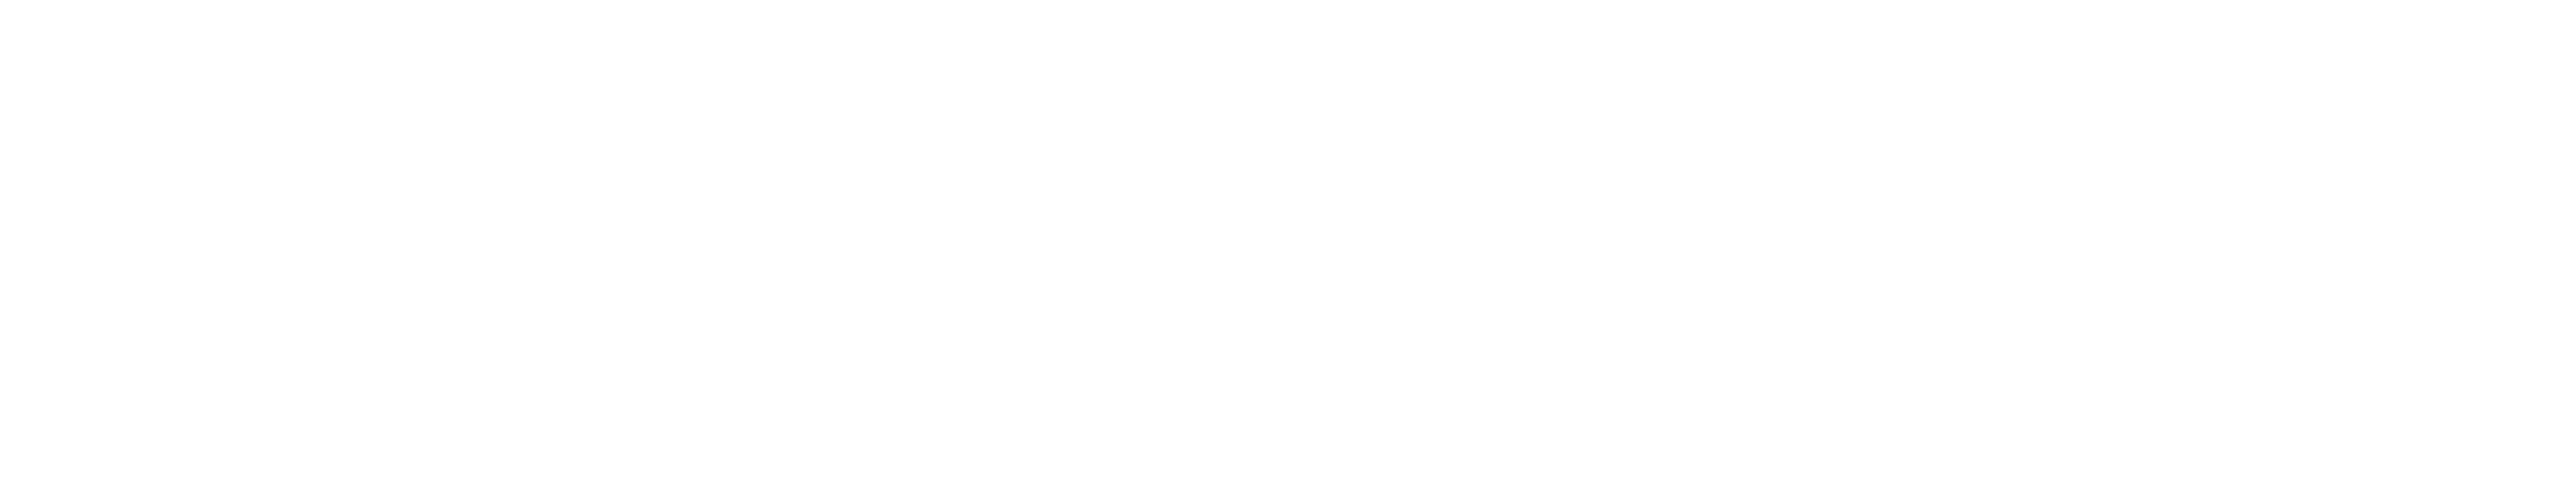 EventX_logo_all_white